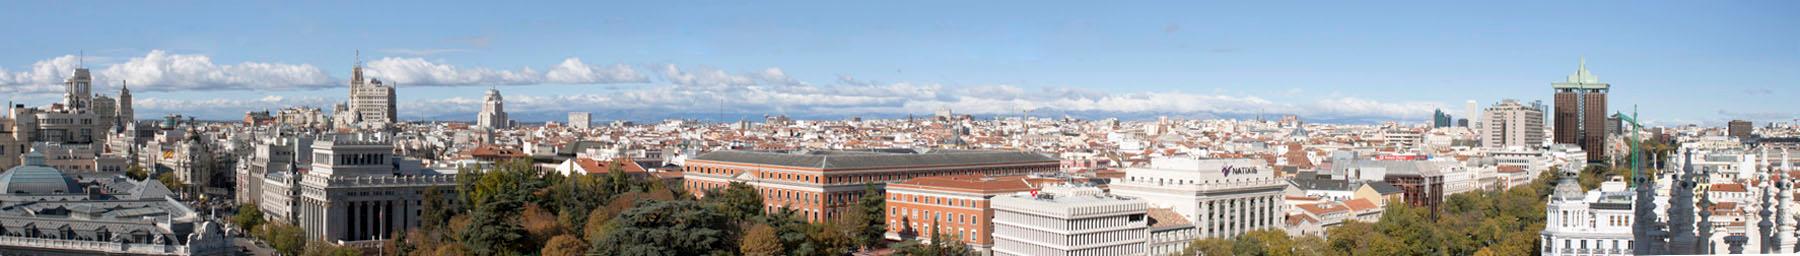 Banner image for Madrid on GigsGuide